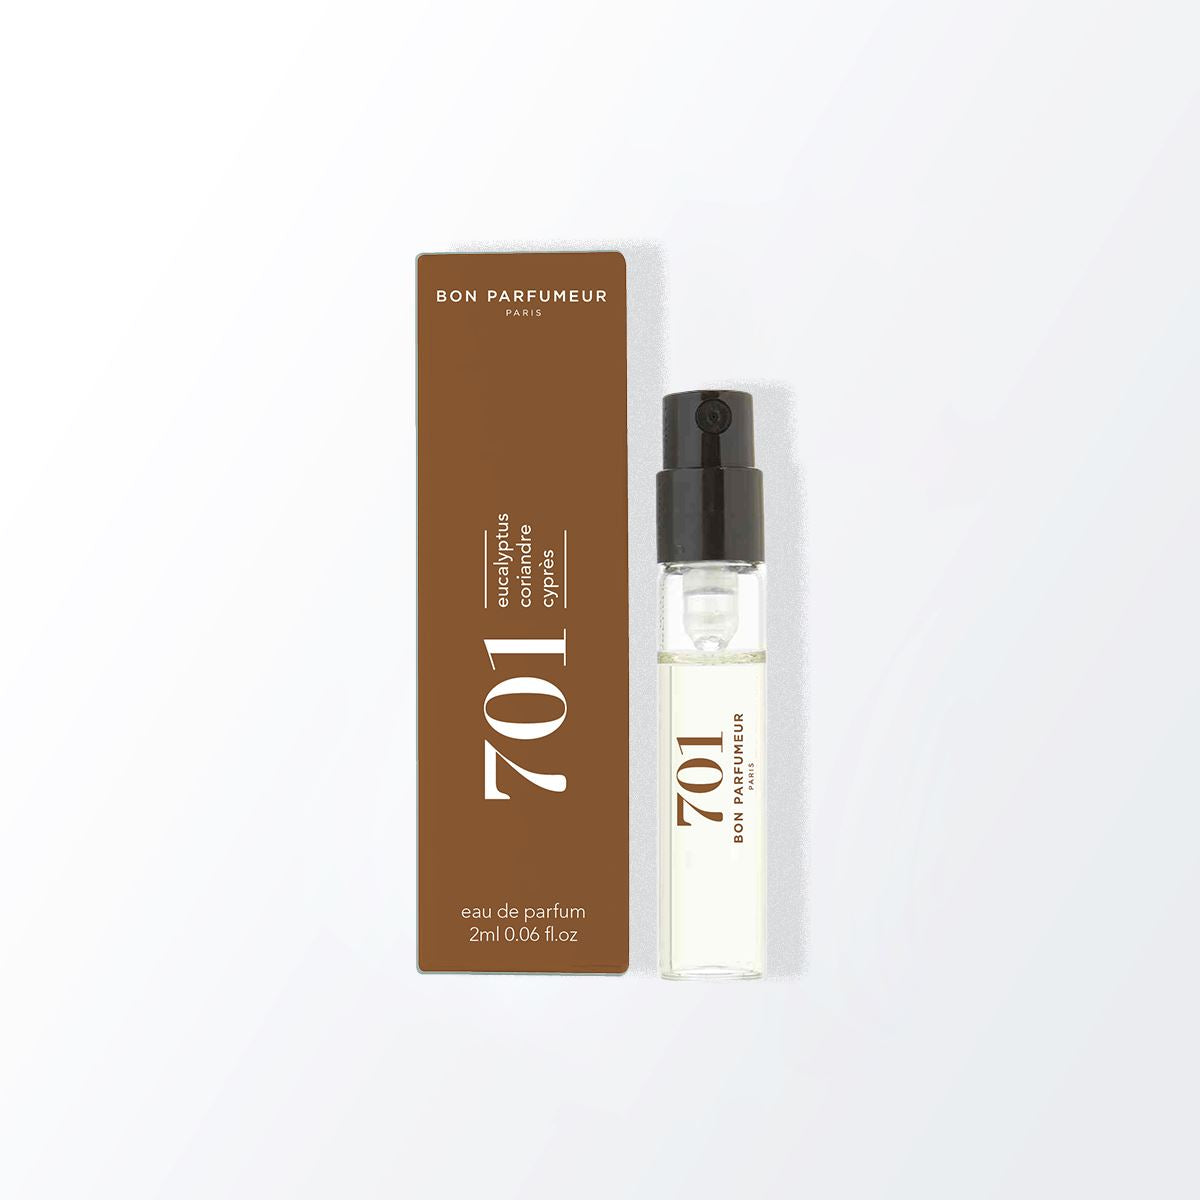 Spray parfumé payant Bon Parfumeur 701: Eucalyptus, coriandre, cyprès 